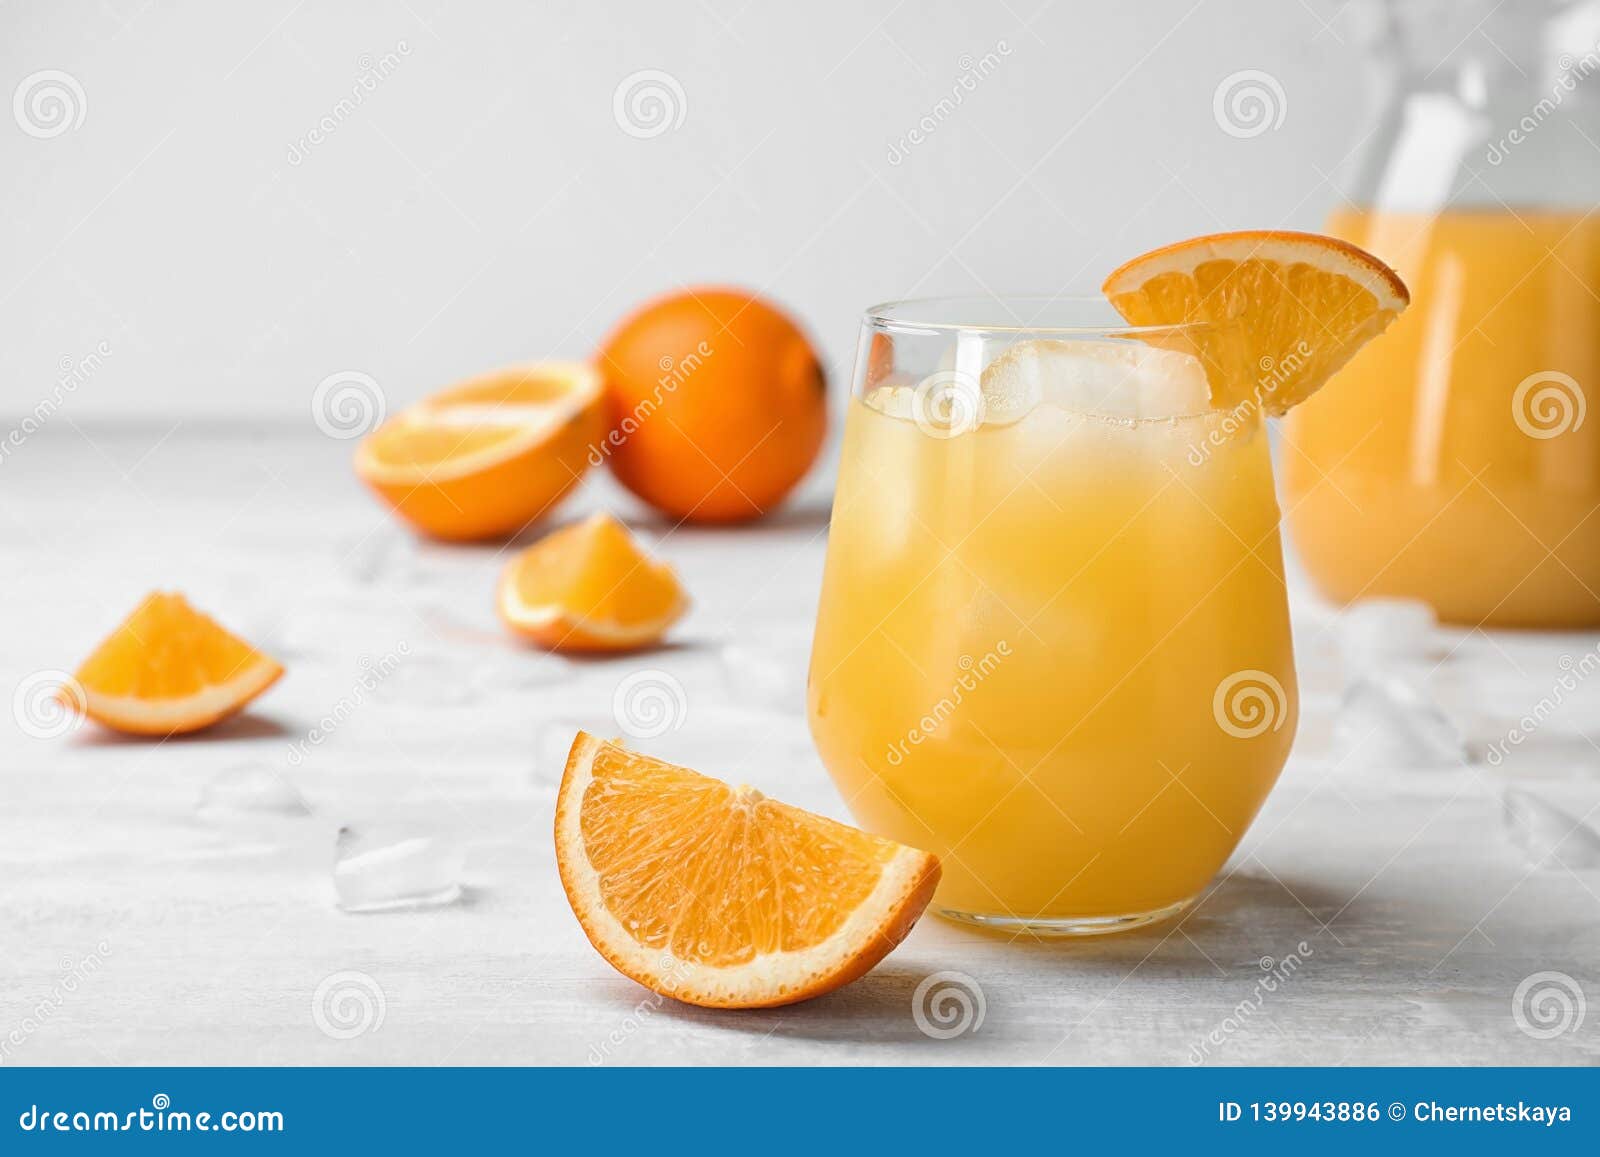 https://thumbs.dreamstime.com/z/glass-orange-juice-ice-cubes-cut-fruit-table-space-text-139943886.jpg